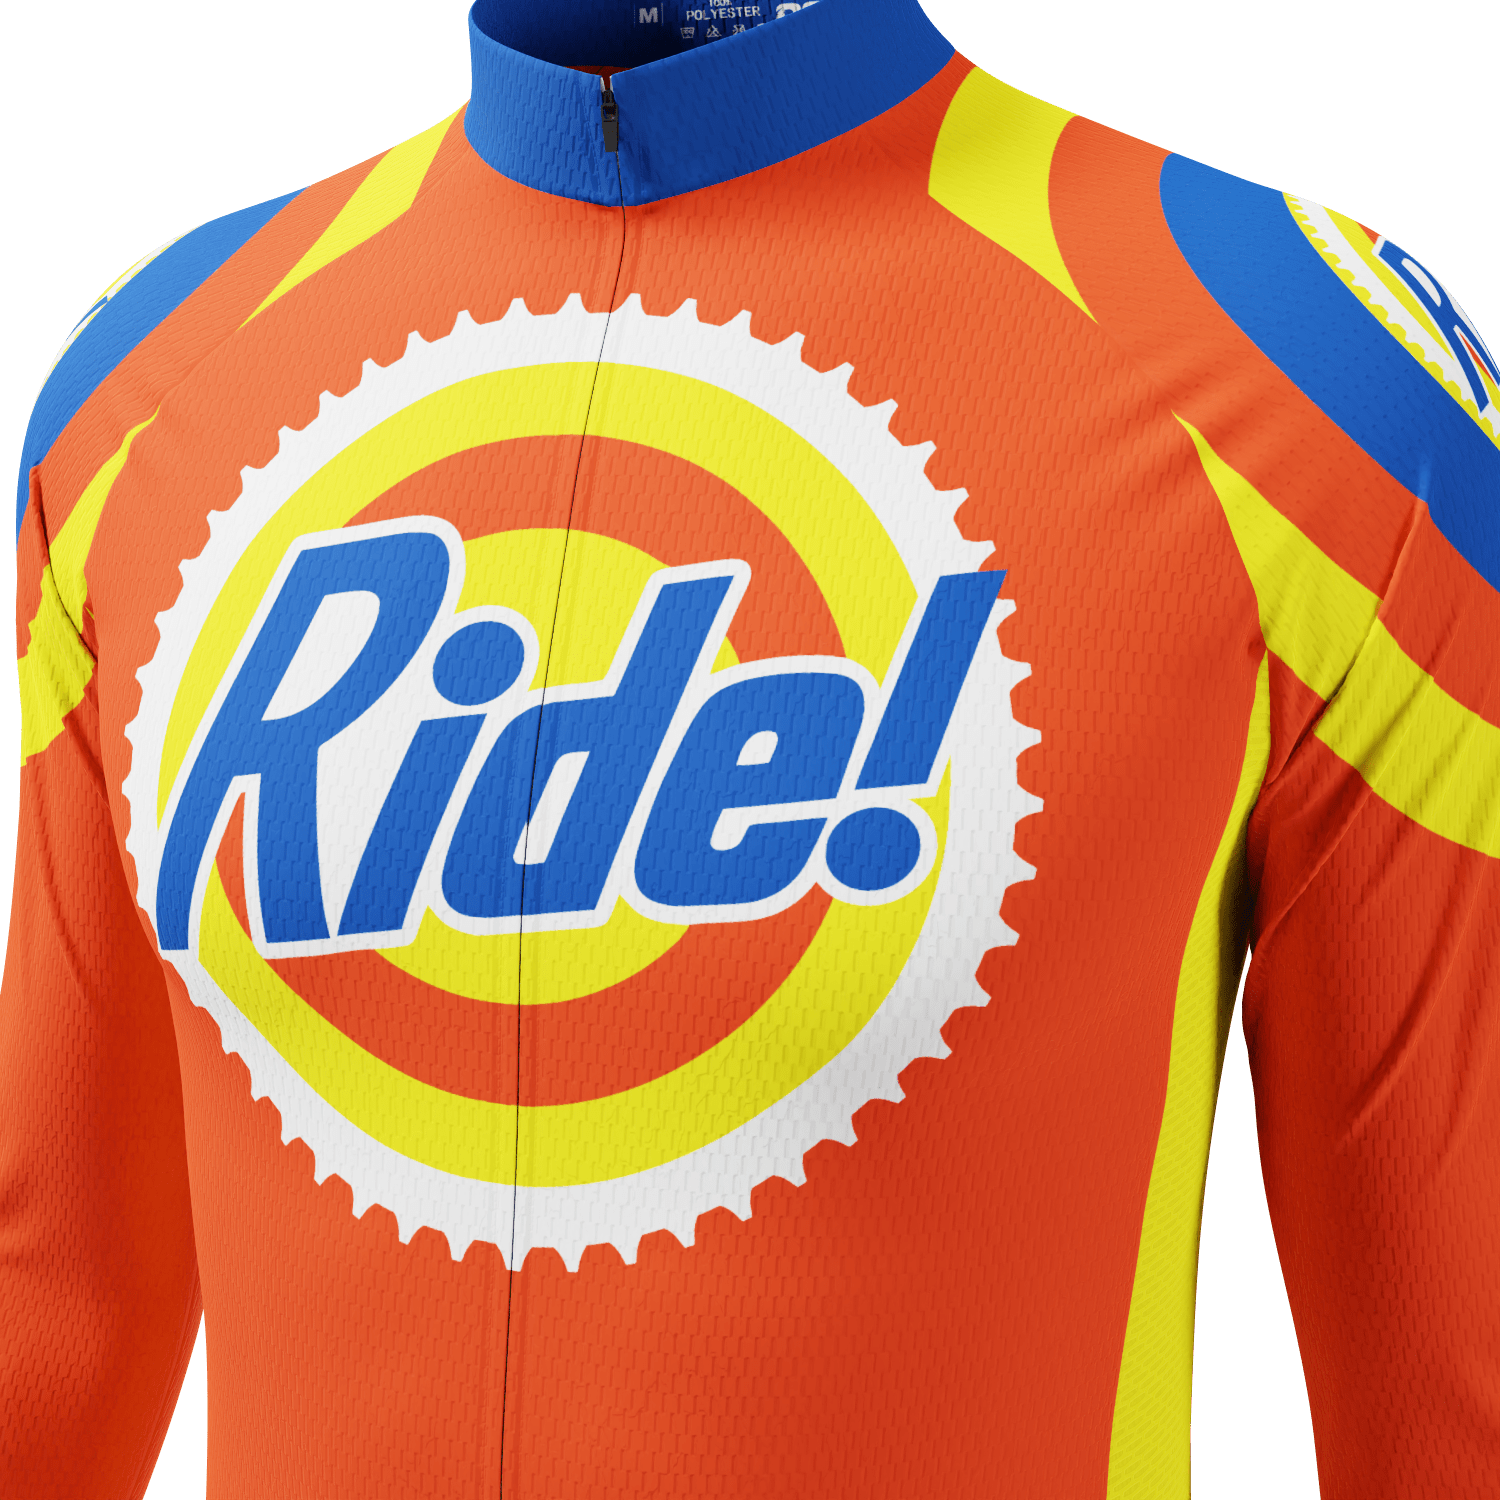 Men's Ride the Tide Short Long Sleeve Cycling Jersey